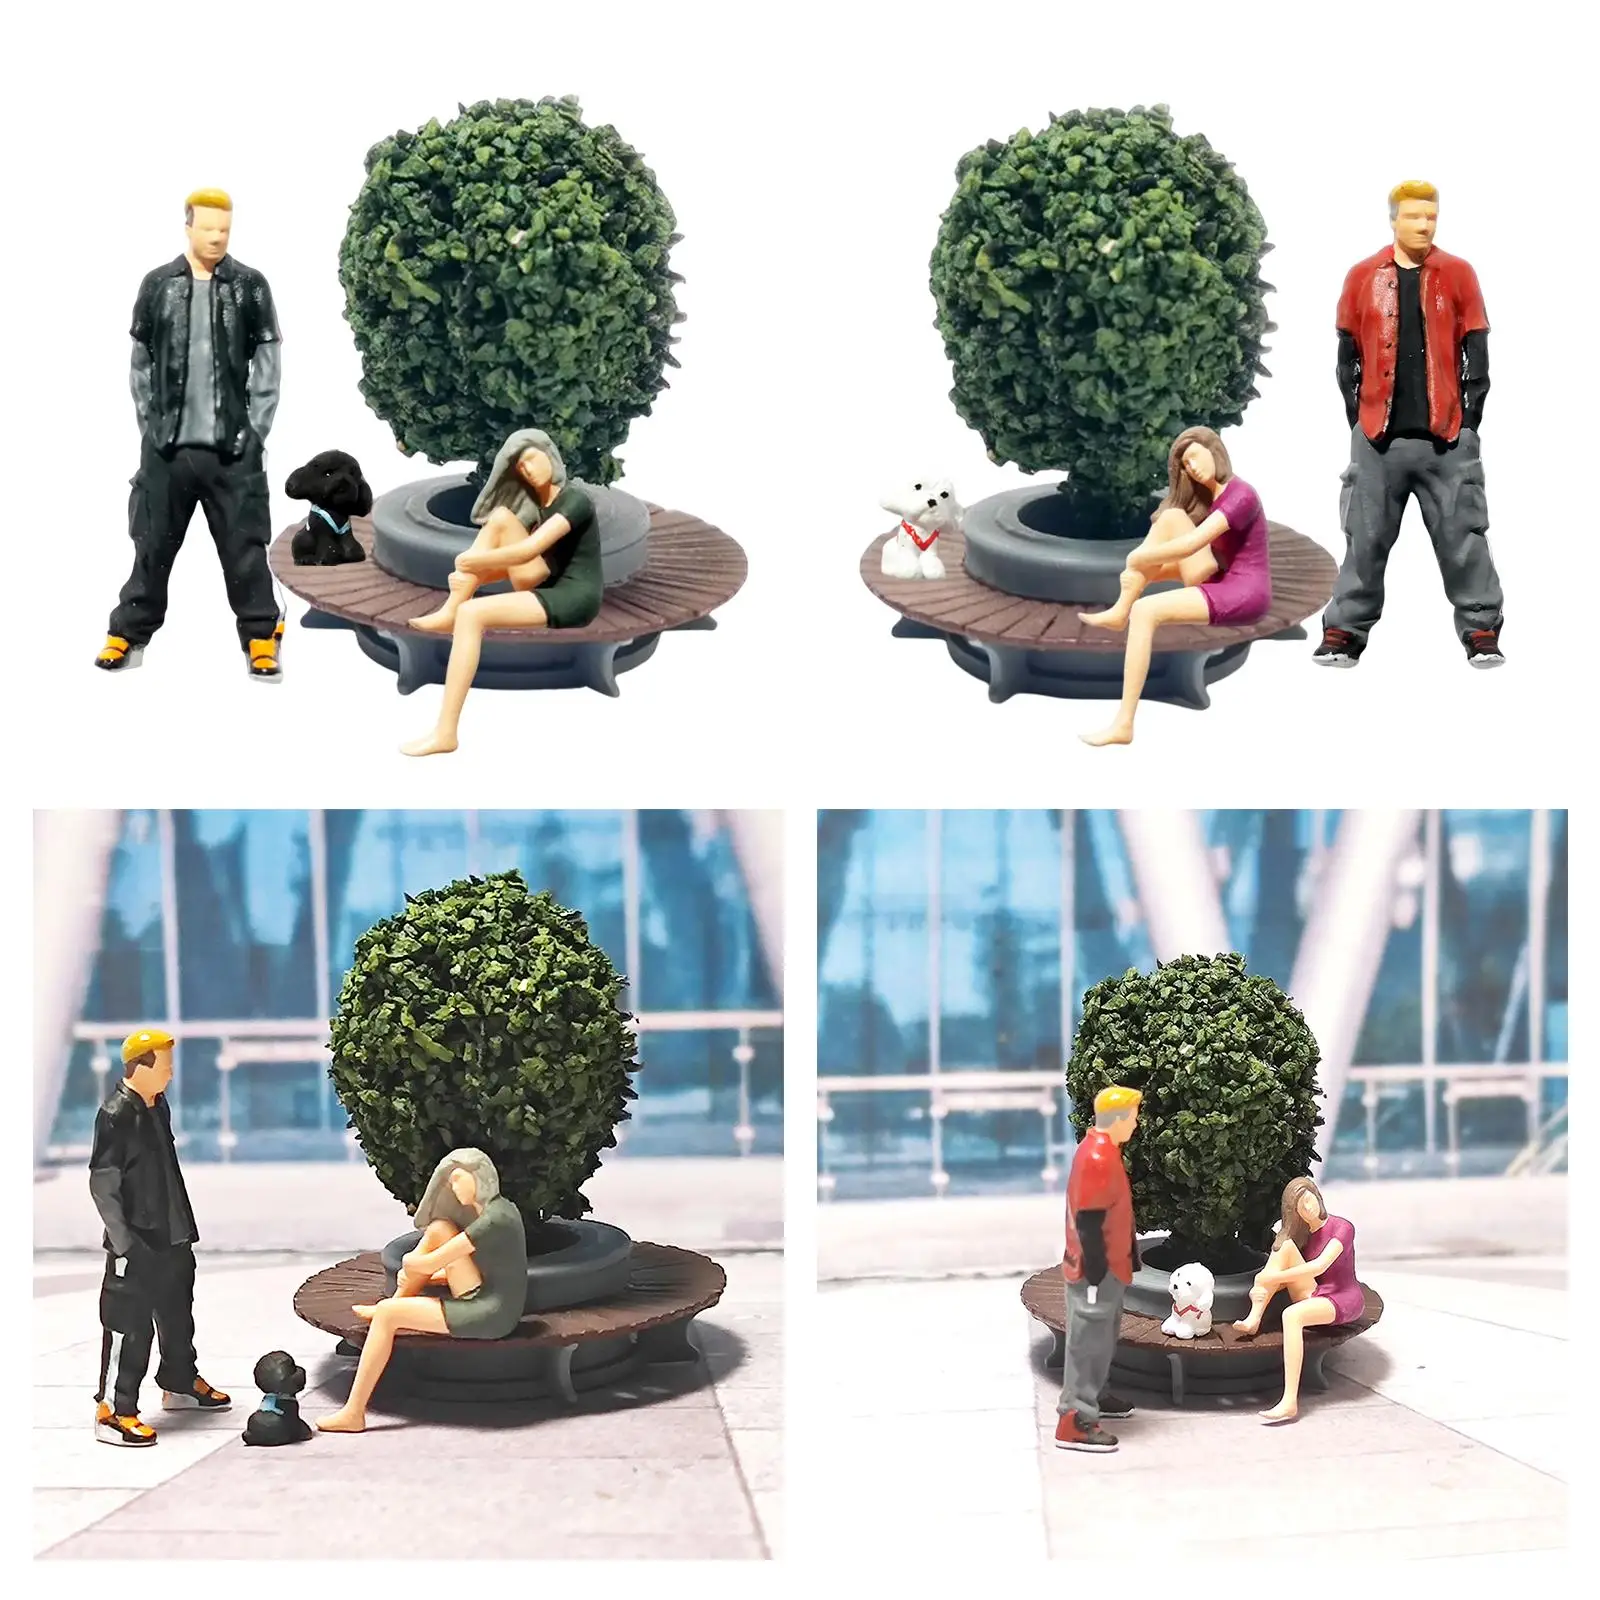 1/64 Miniature Model Street People Figures Diorama Children Toys Layout